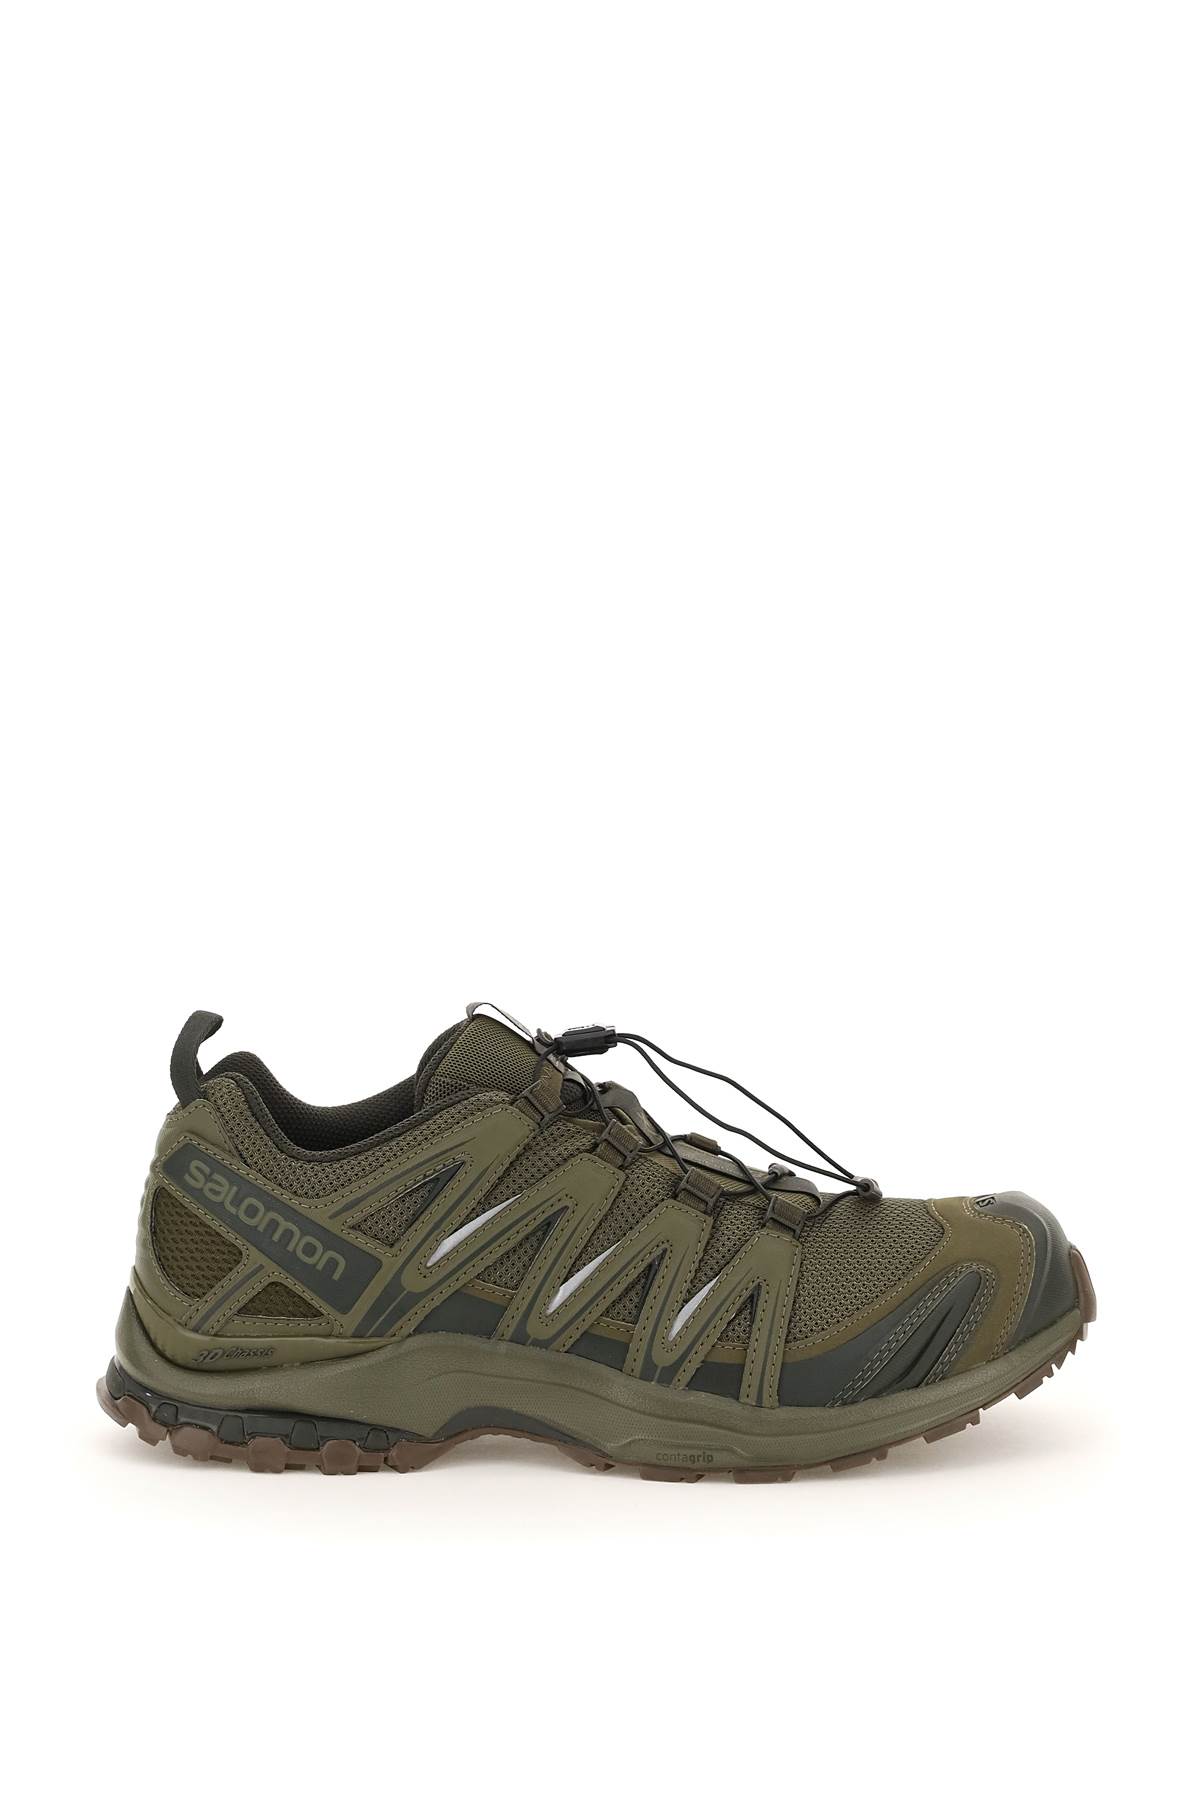 Salomon Xa Pro 3d Trail Running Shoes